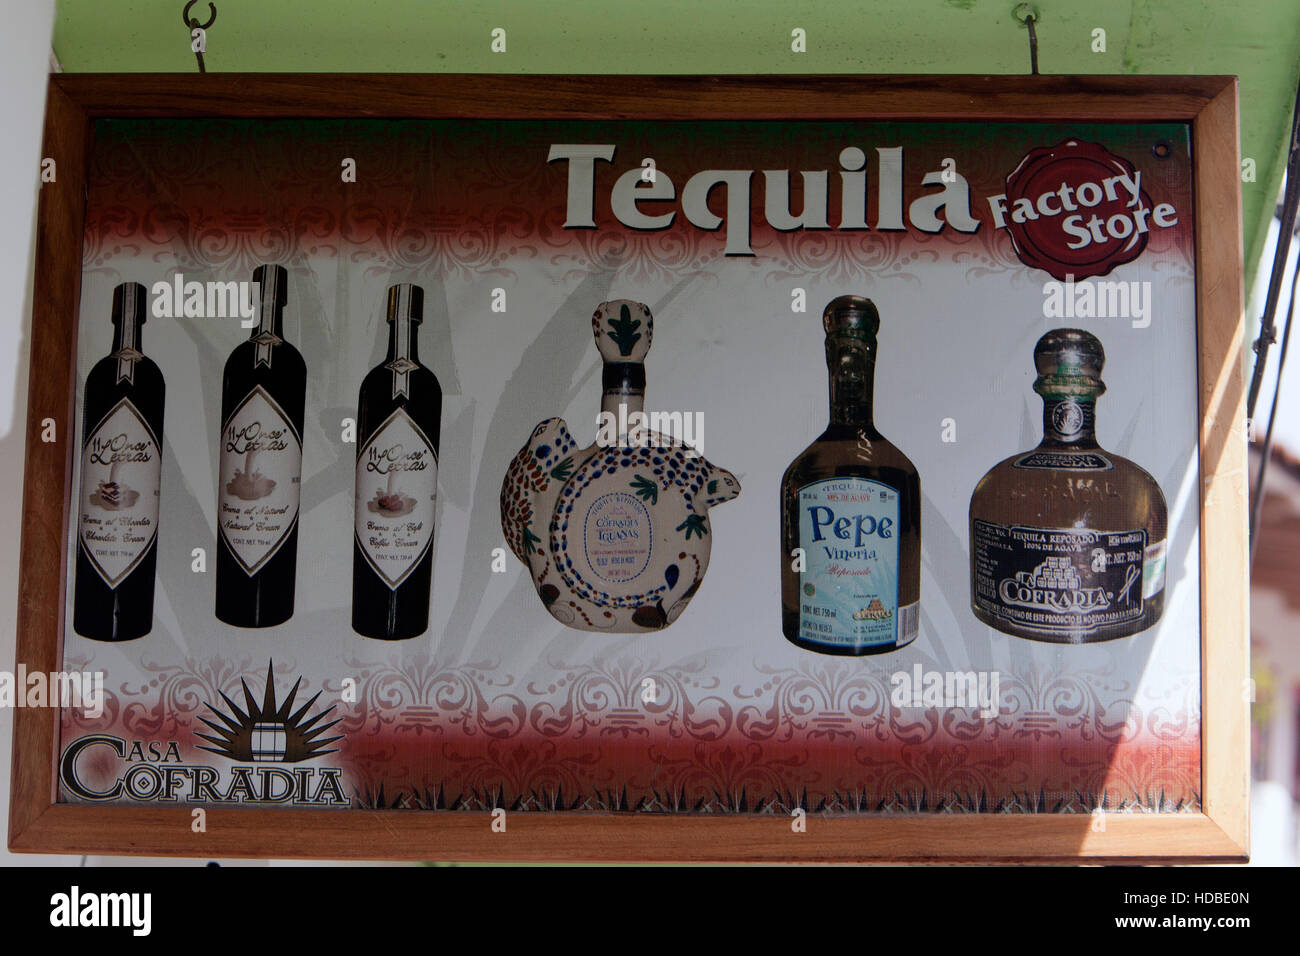 Sign tequila factory store Puerto Vallarta Mexico Stock Photo